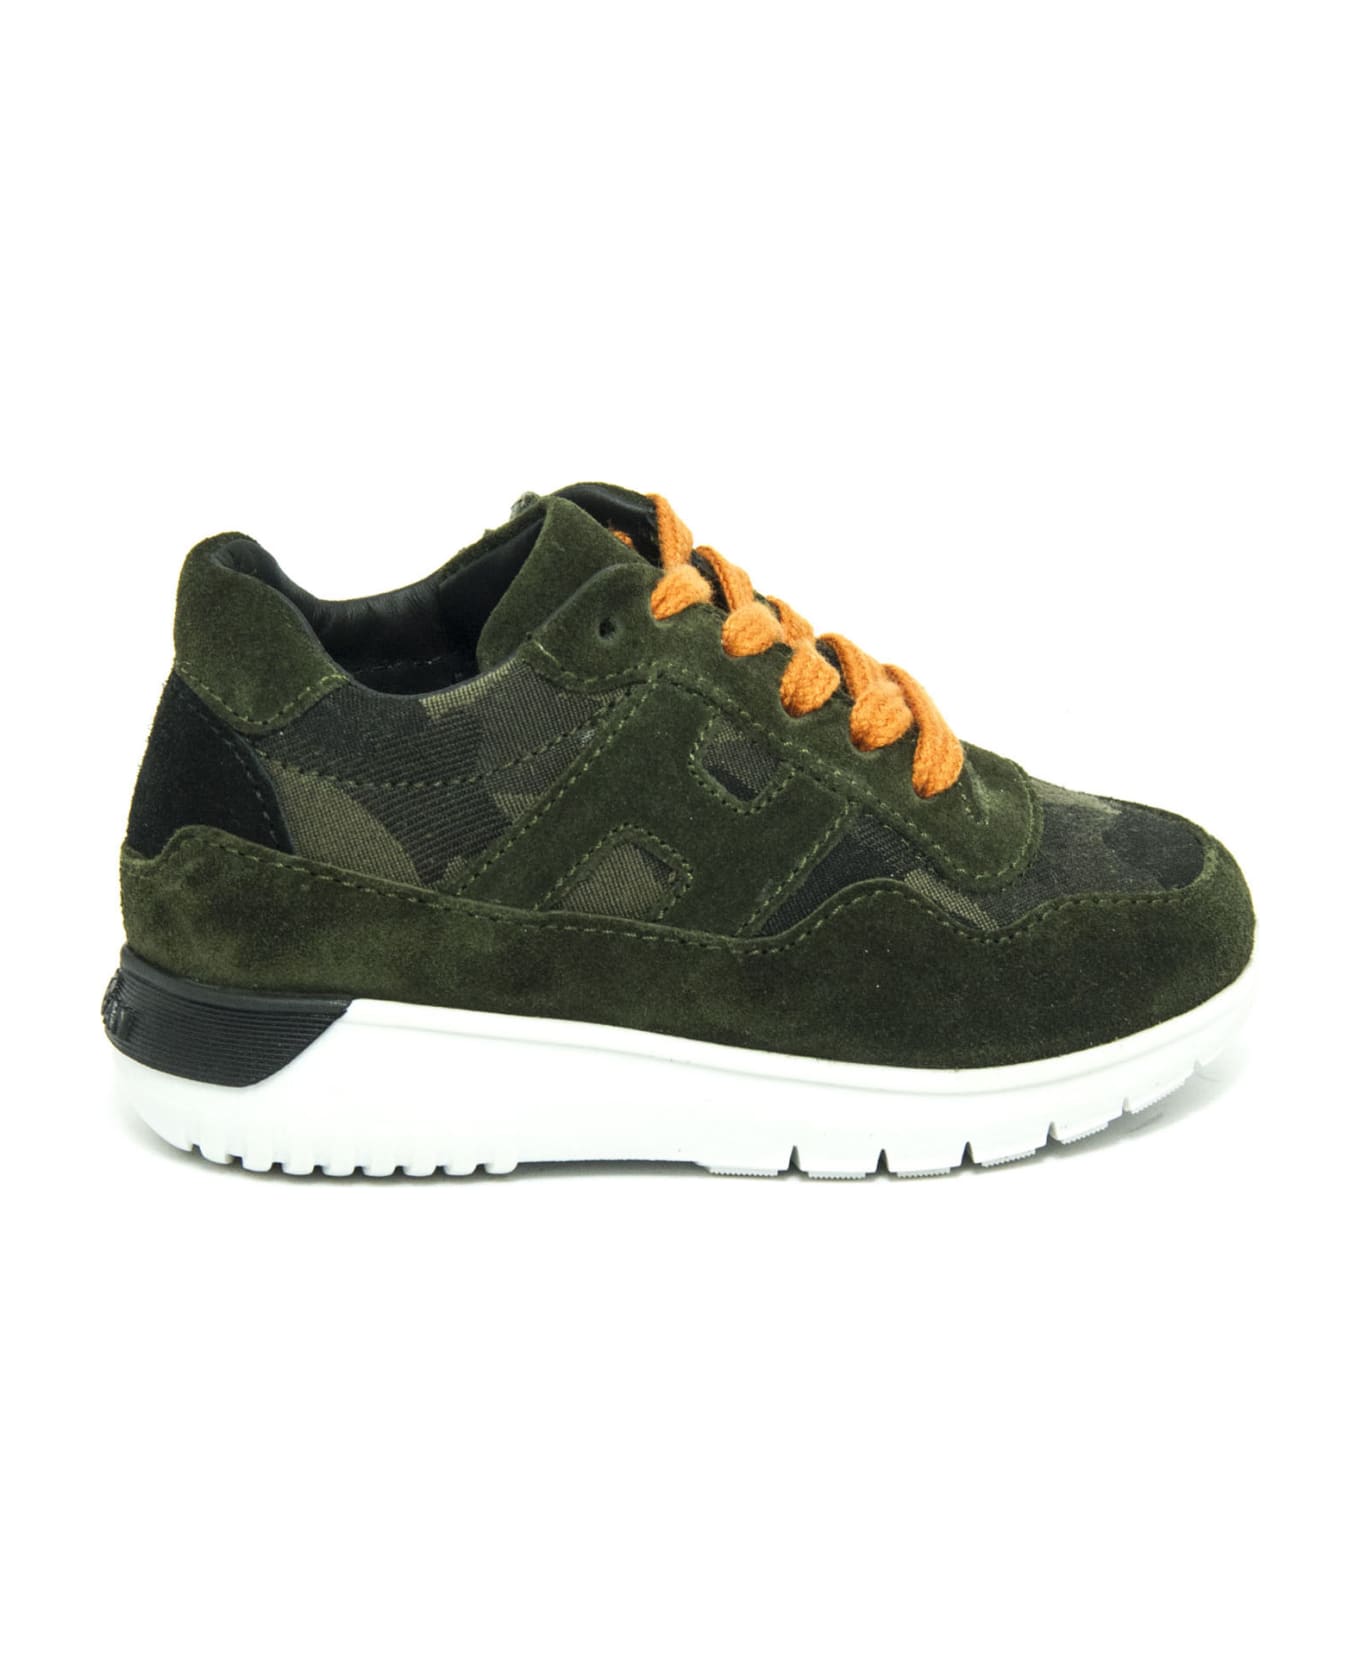 Hogan Sneakers In Green Suede - Camouflage